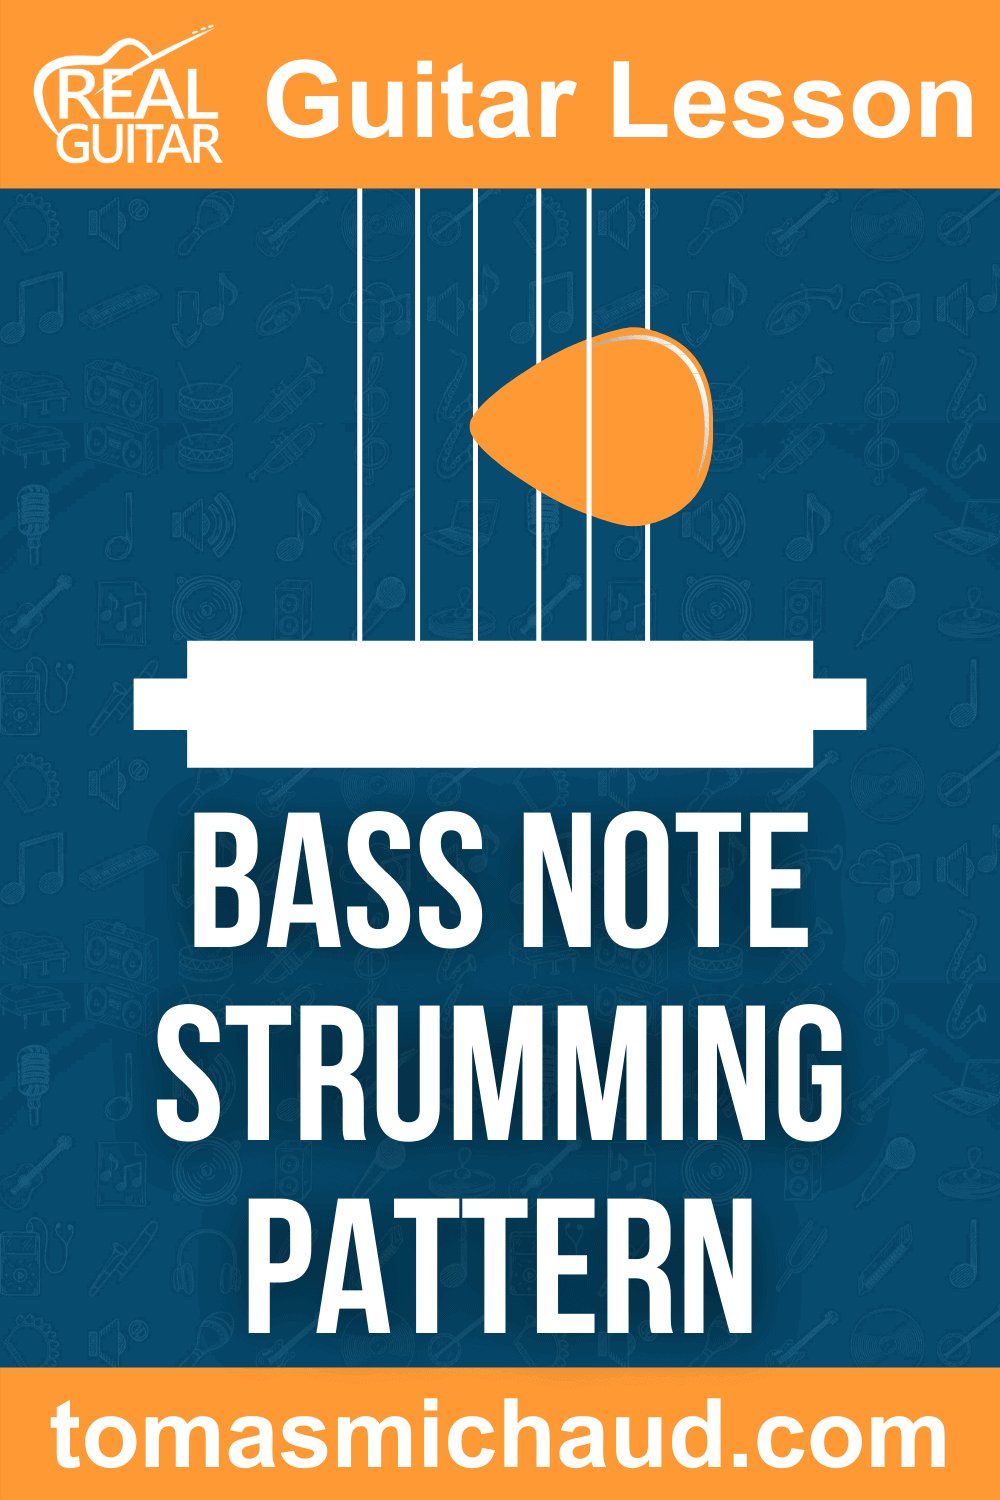 Bass Note Strumming Pattern